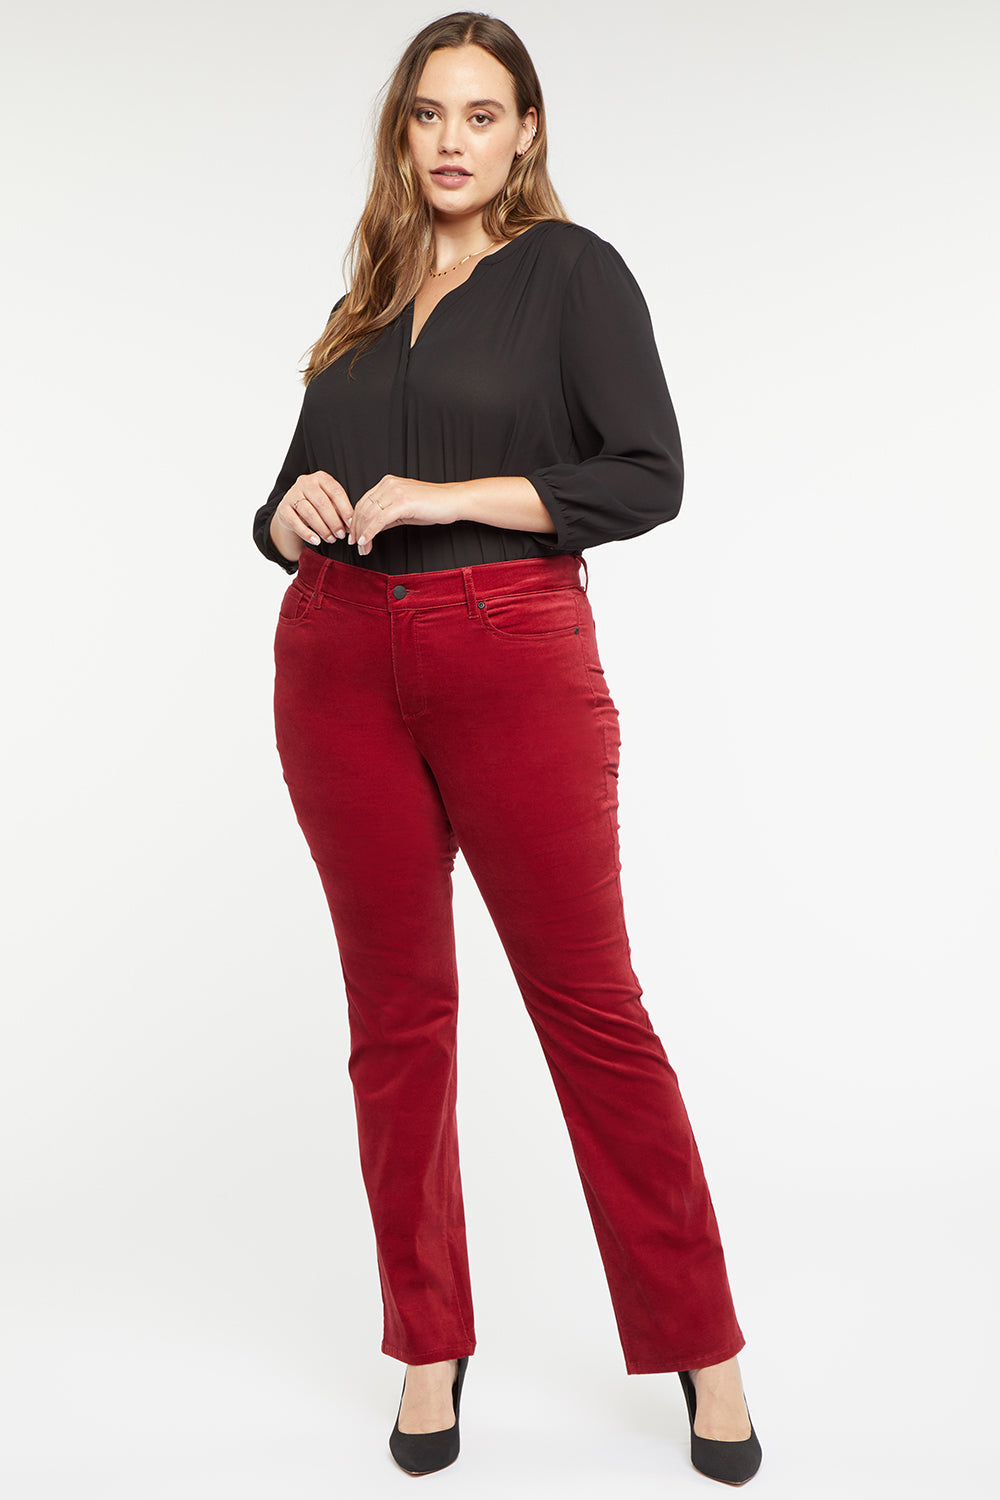 Womens Plus Size Burgundy Red Denim skinny jeans Stretch Pants